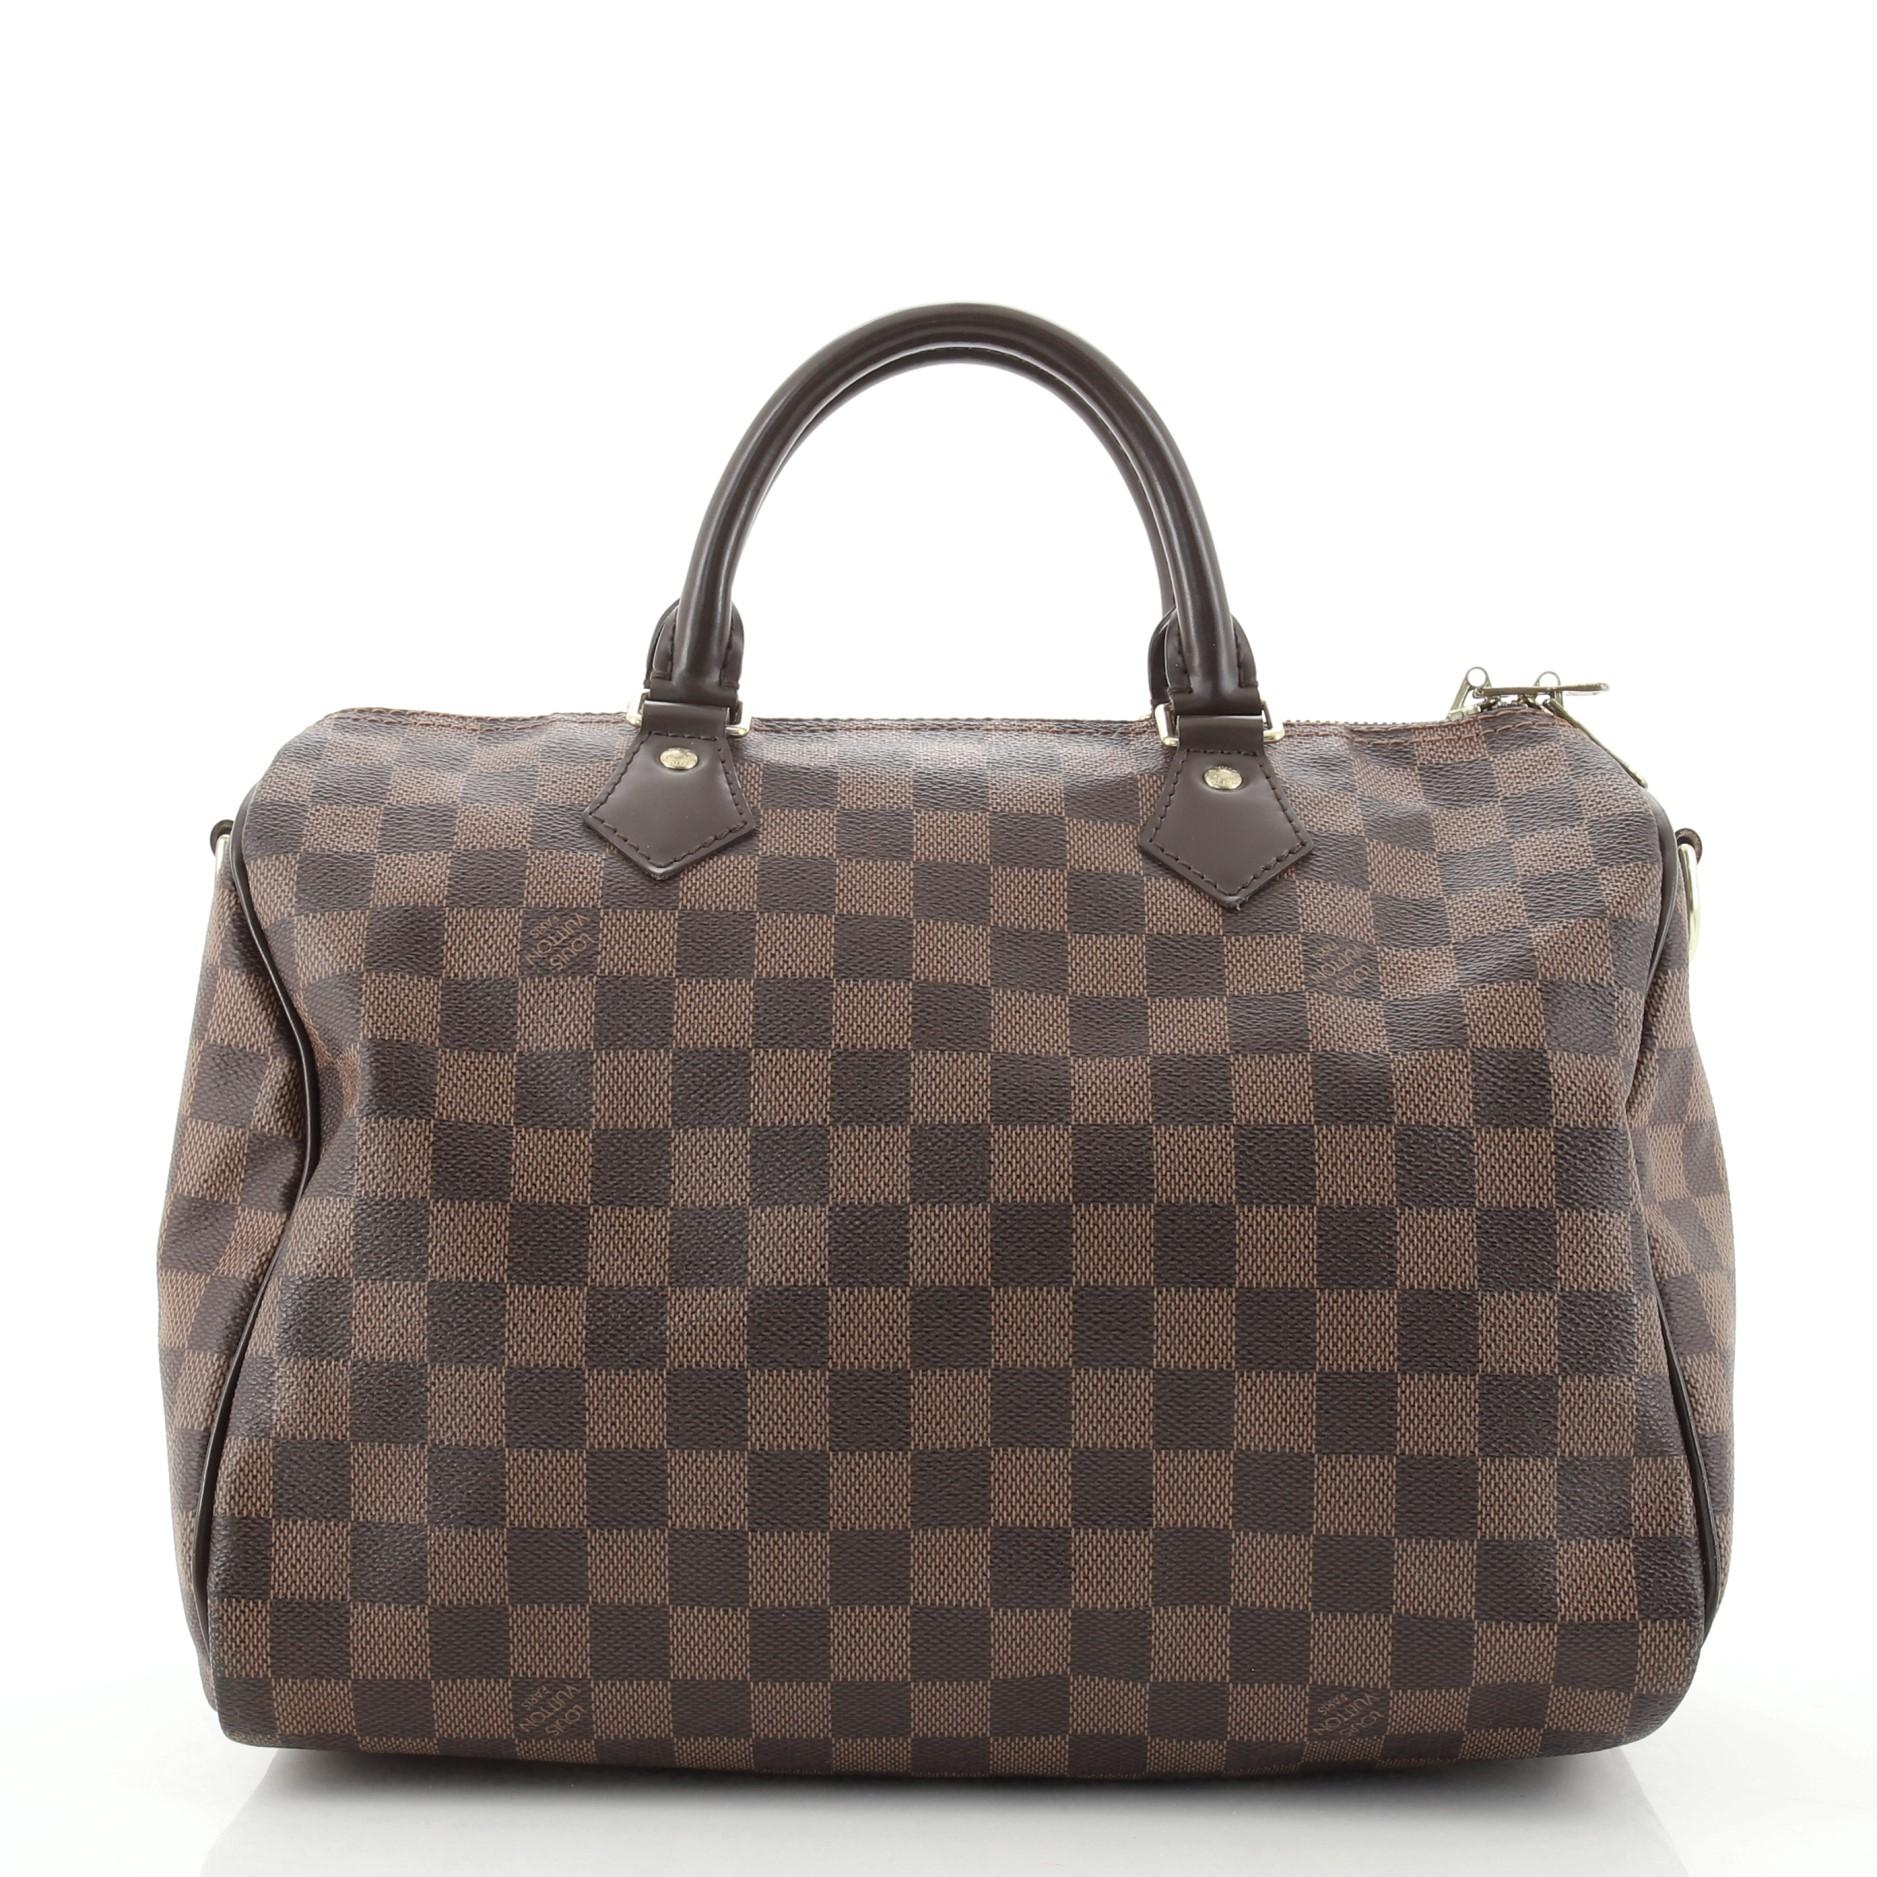 Black Louis Vuitton Speedy Bandouliere Bag Damier 30